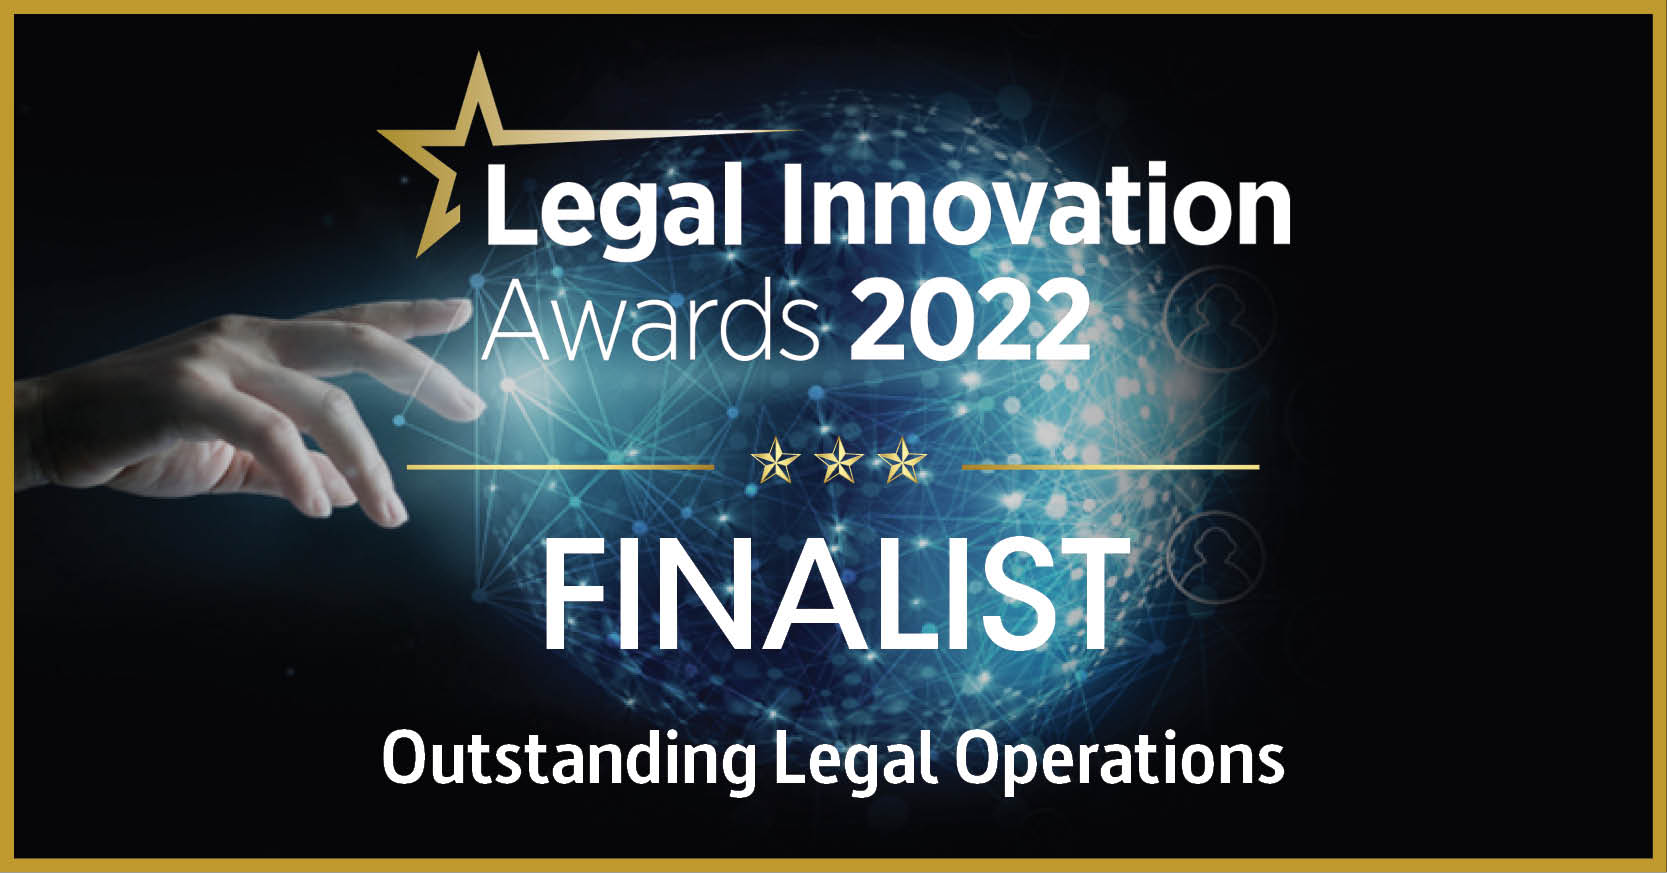 Legal Innovation Awards 2022 Finalist Image